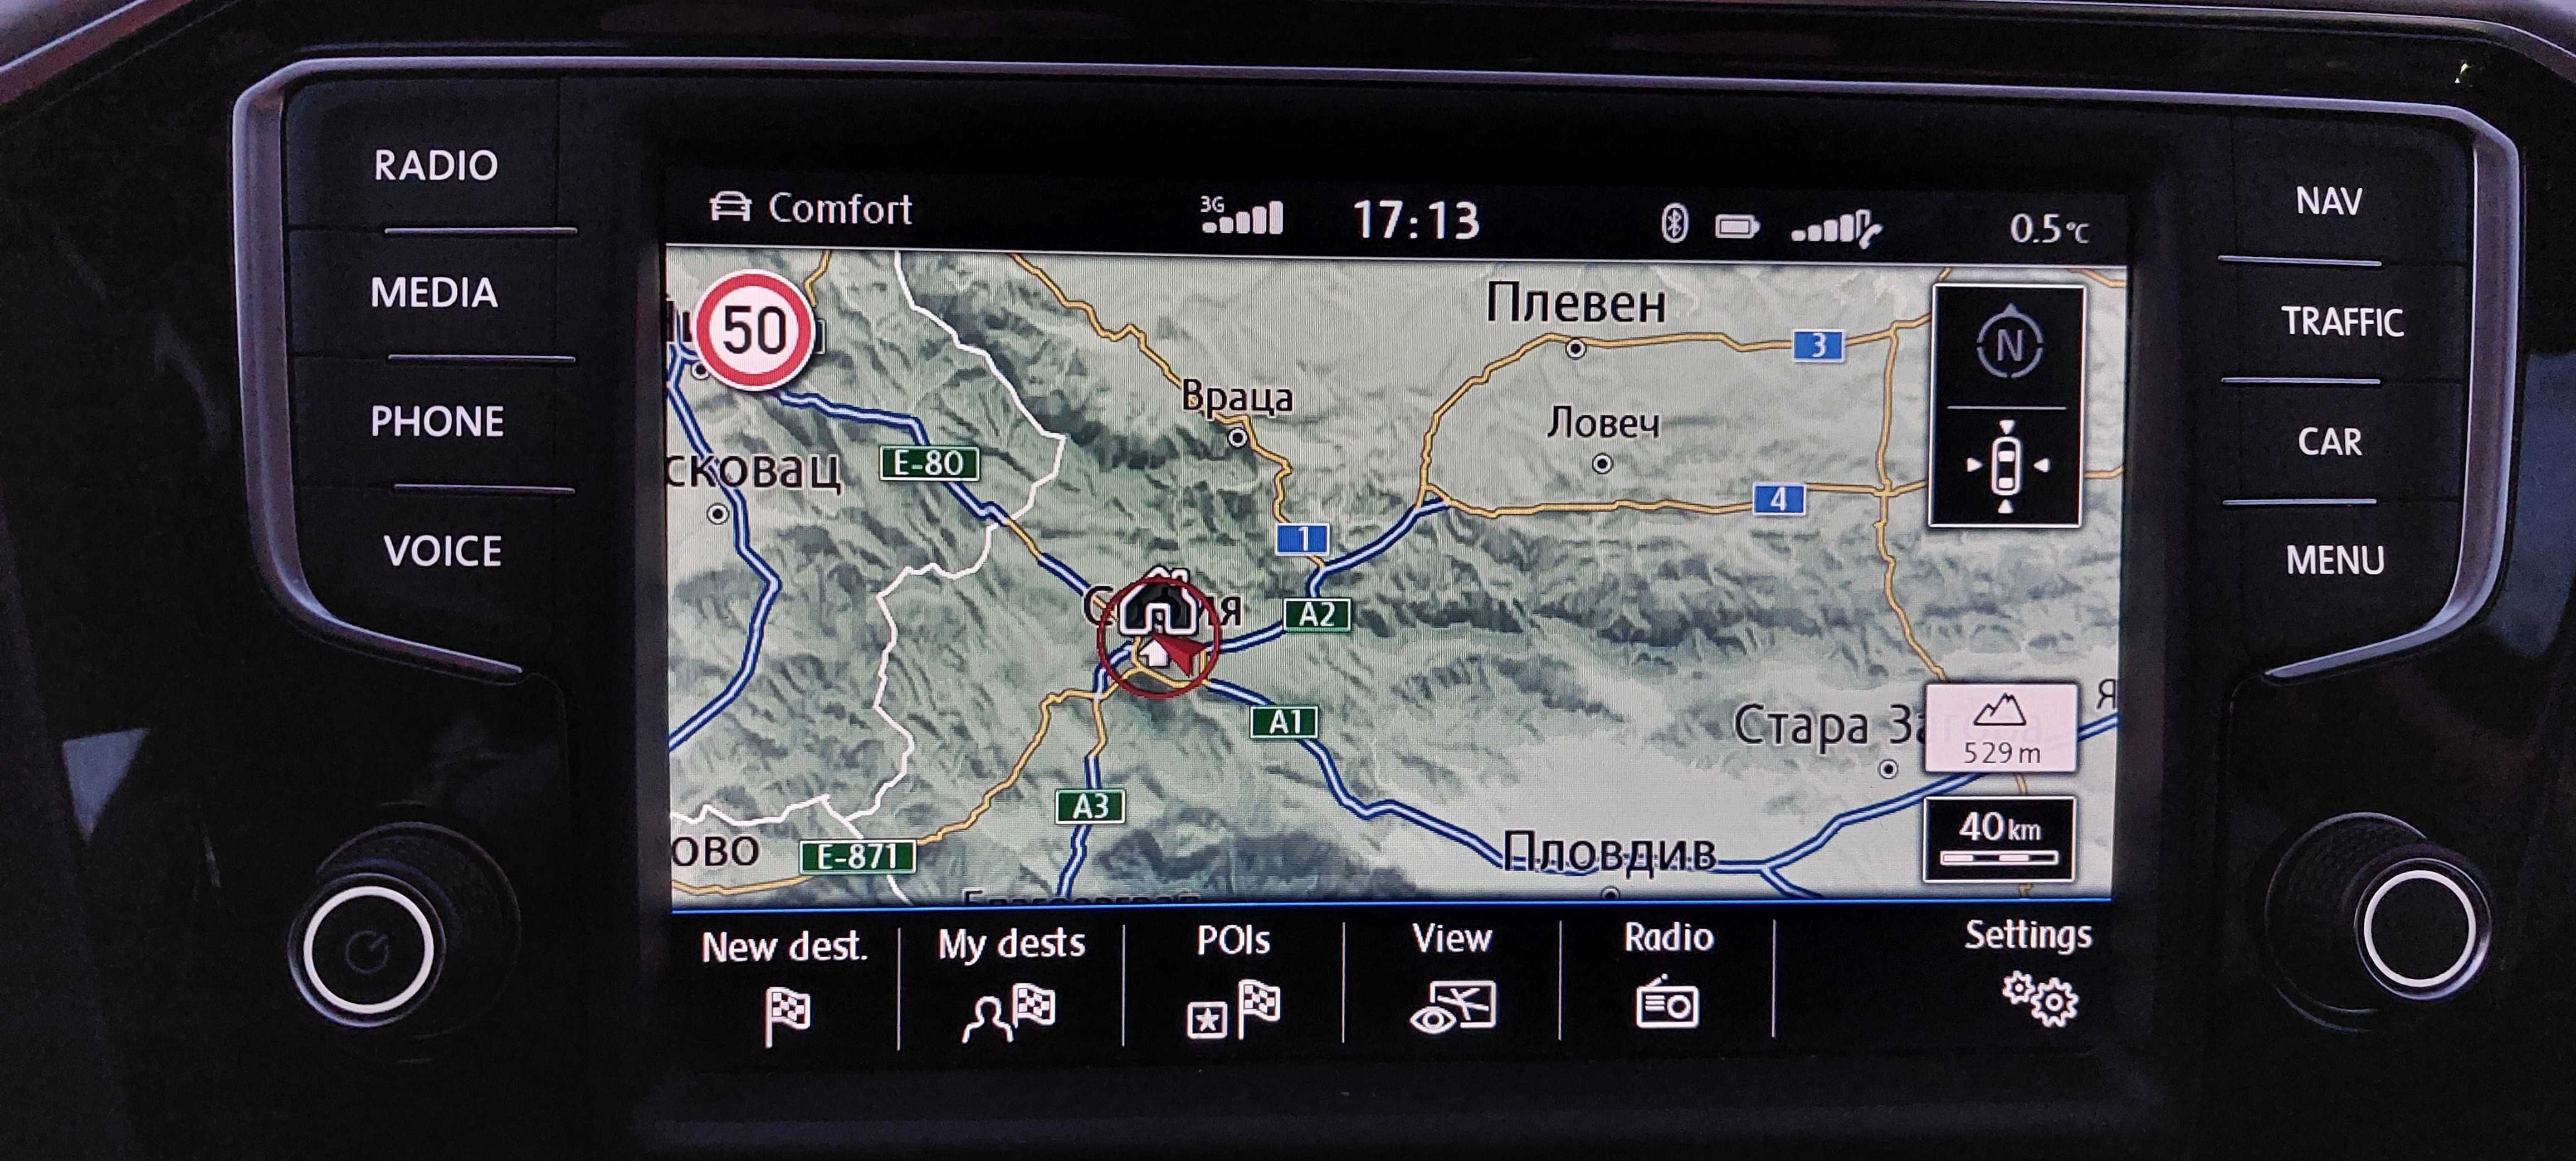 2022 Навигационни карти за VW Discover Media Pro MIB1, MIB2